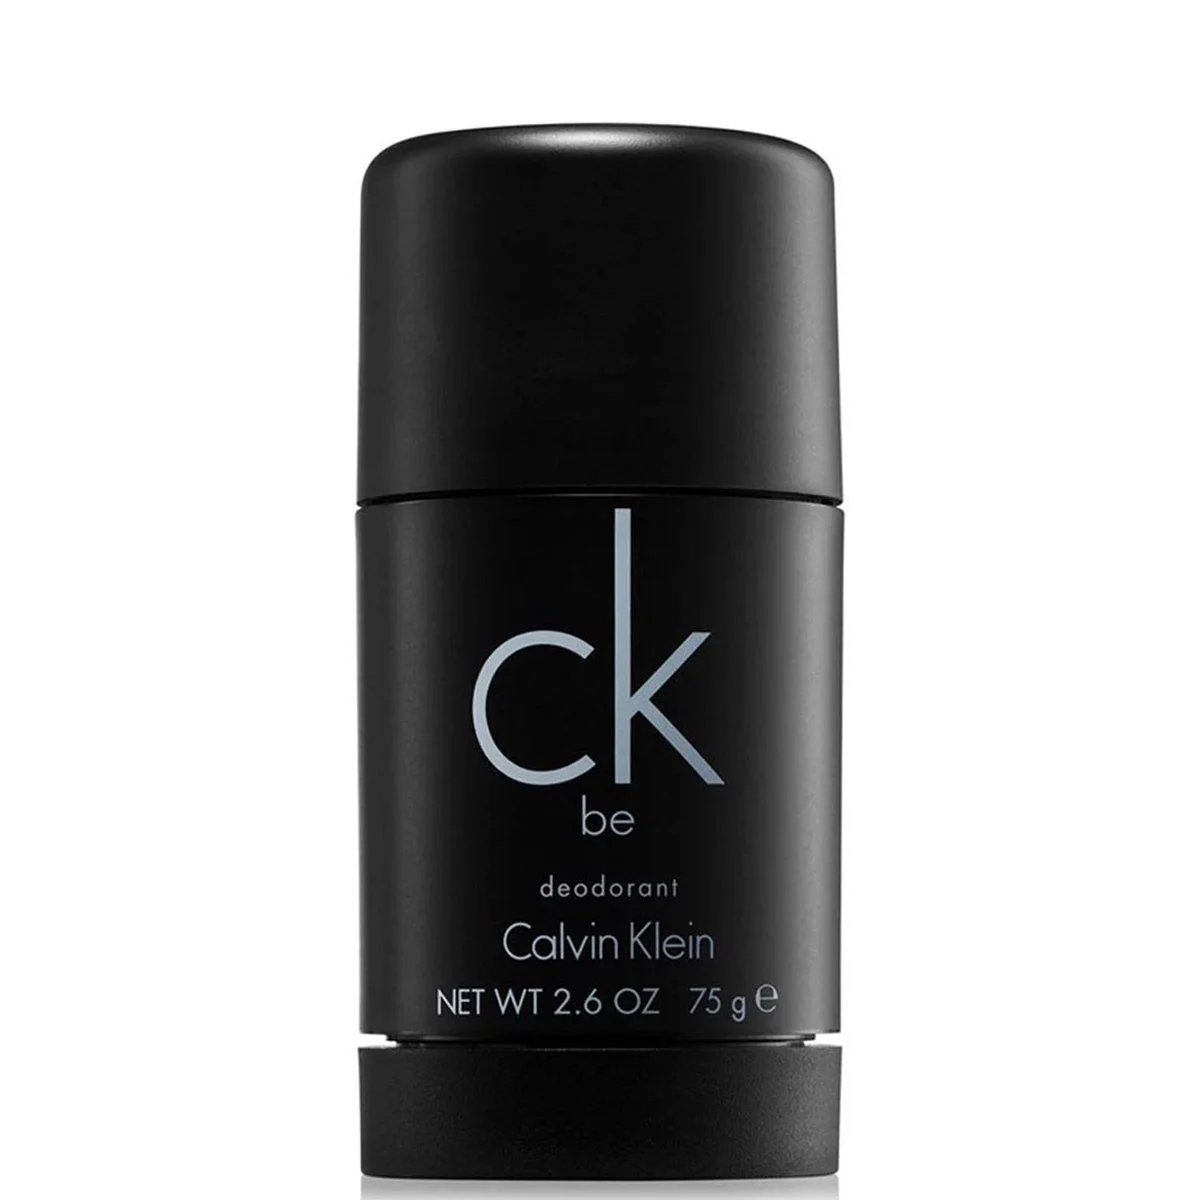 Lăn Khử Mùi Nước Hoa Unisex Calvin Klein CK Be